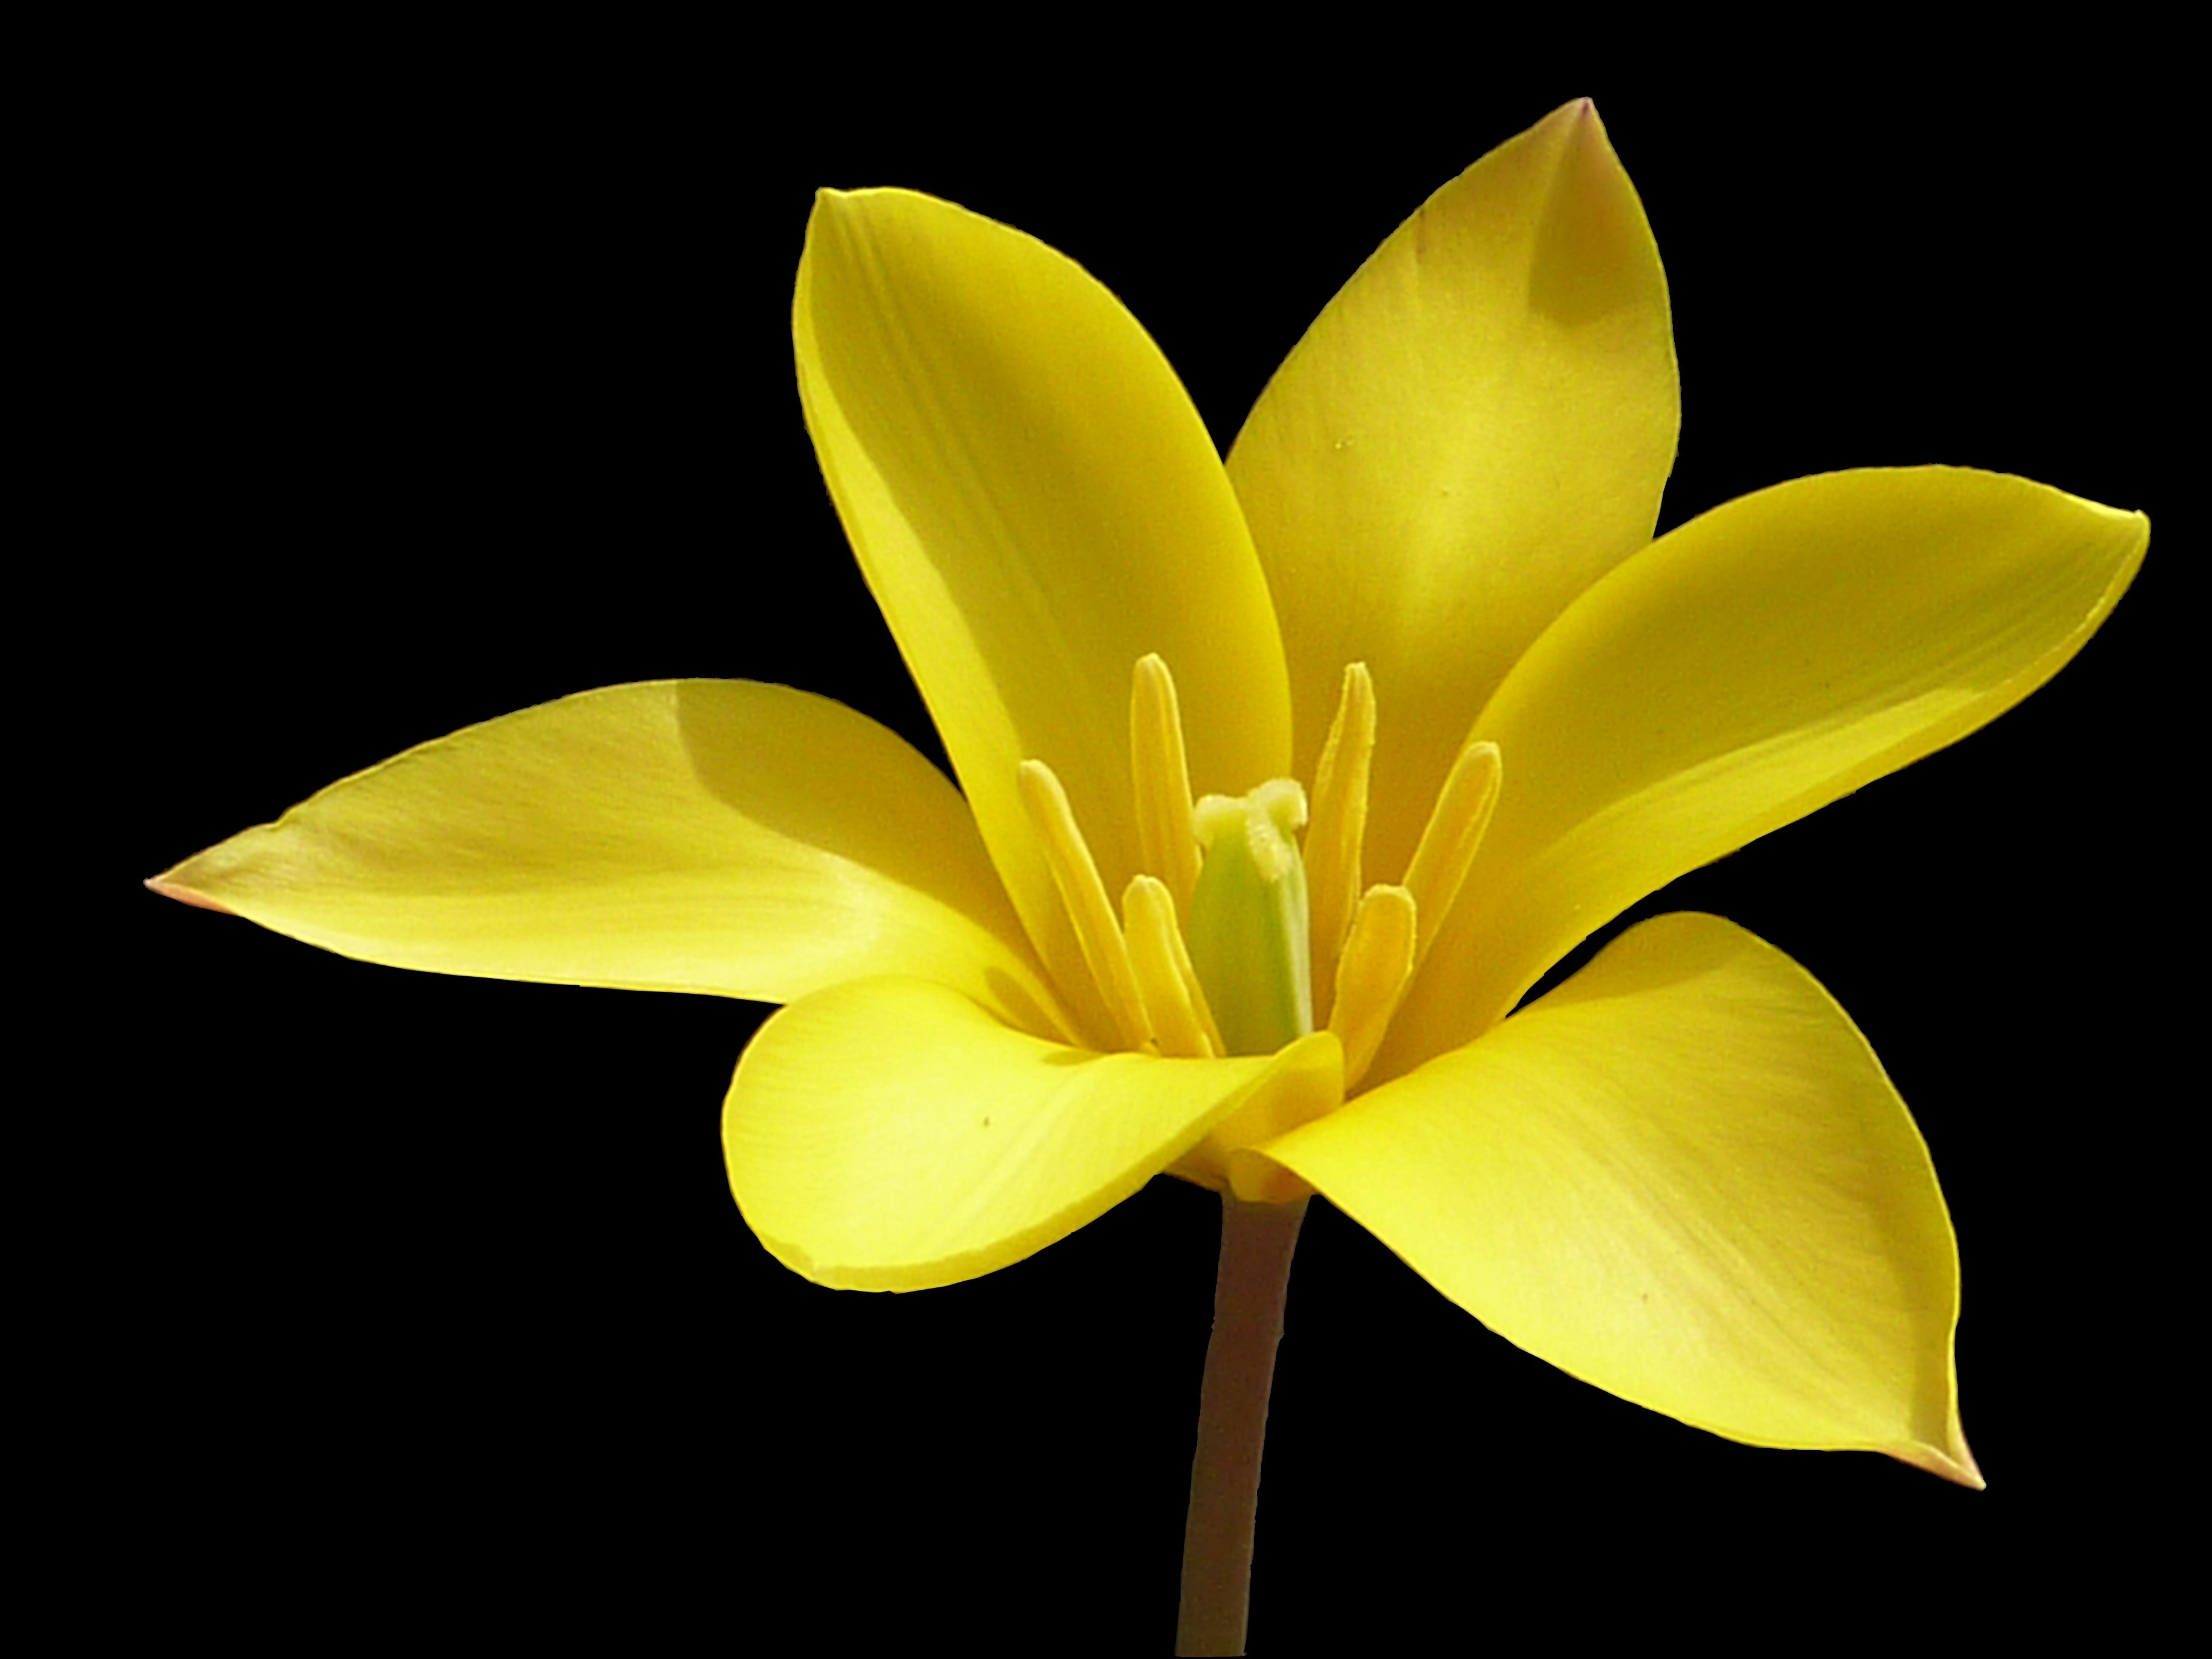 yellow petaled flower against black background